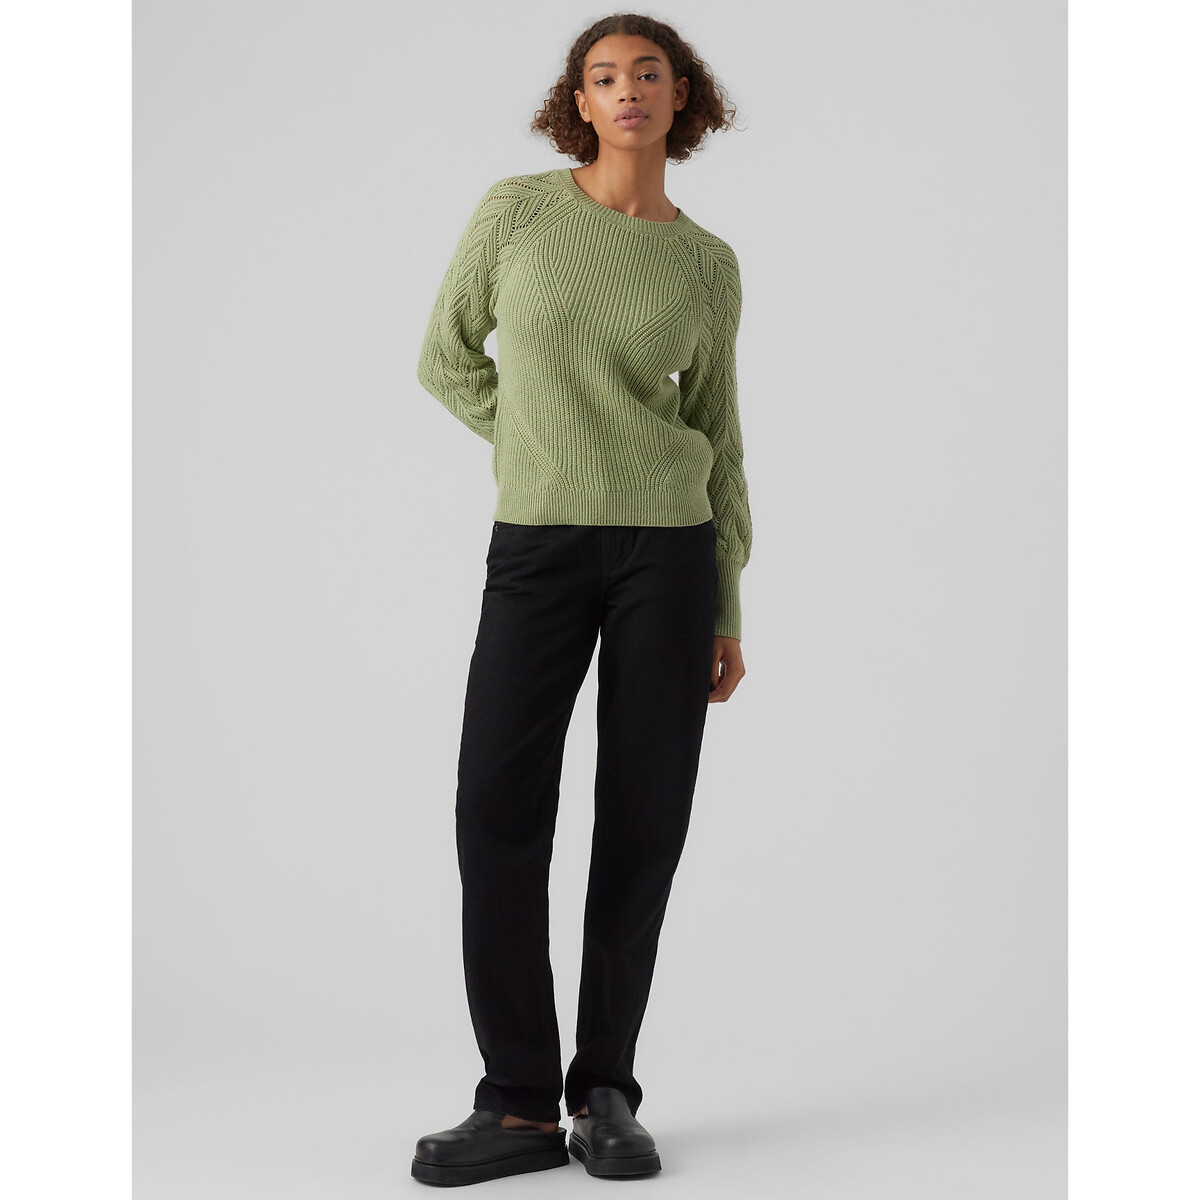 Пуловер С круглым вырезом рукава из ажурного трикотажа XS зеленый LaRedoute, размер XS - фото 3